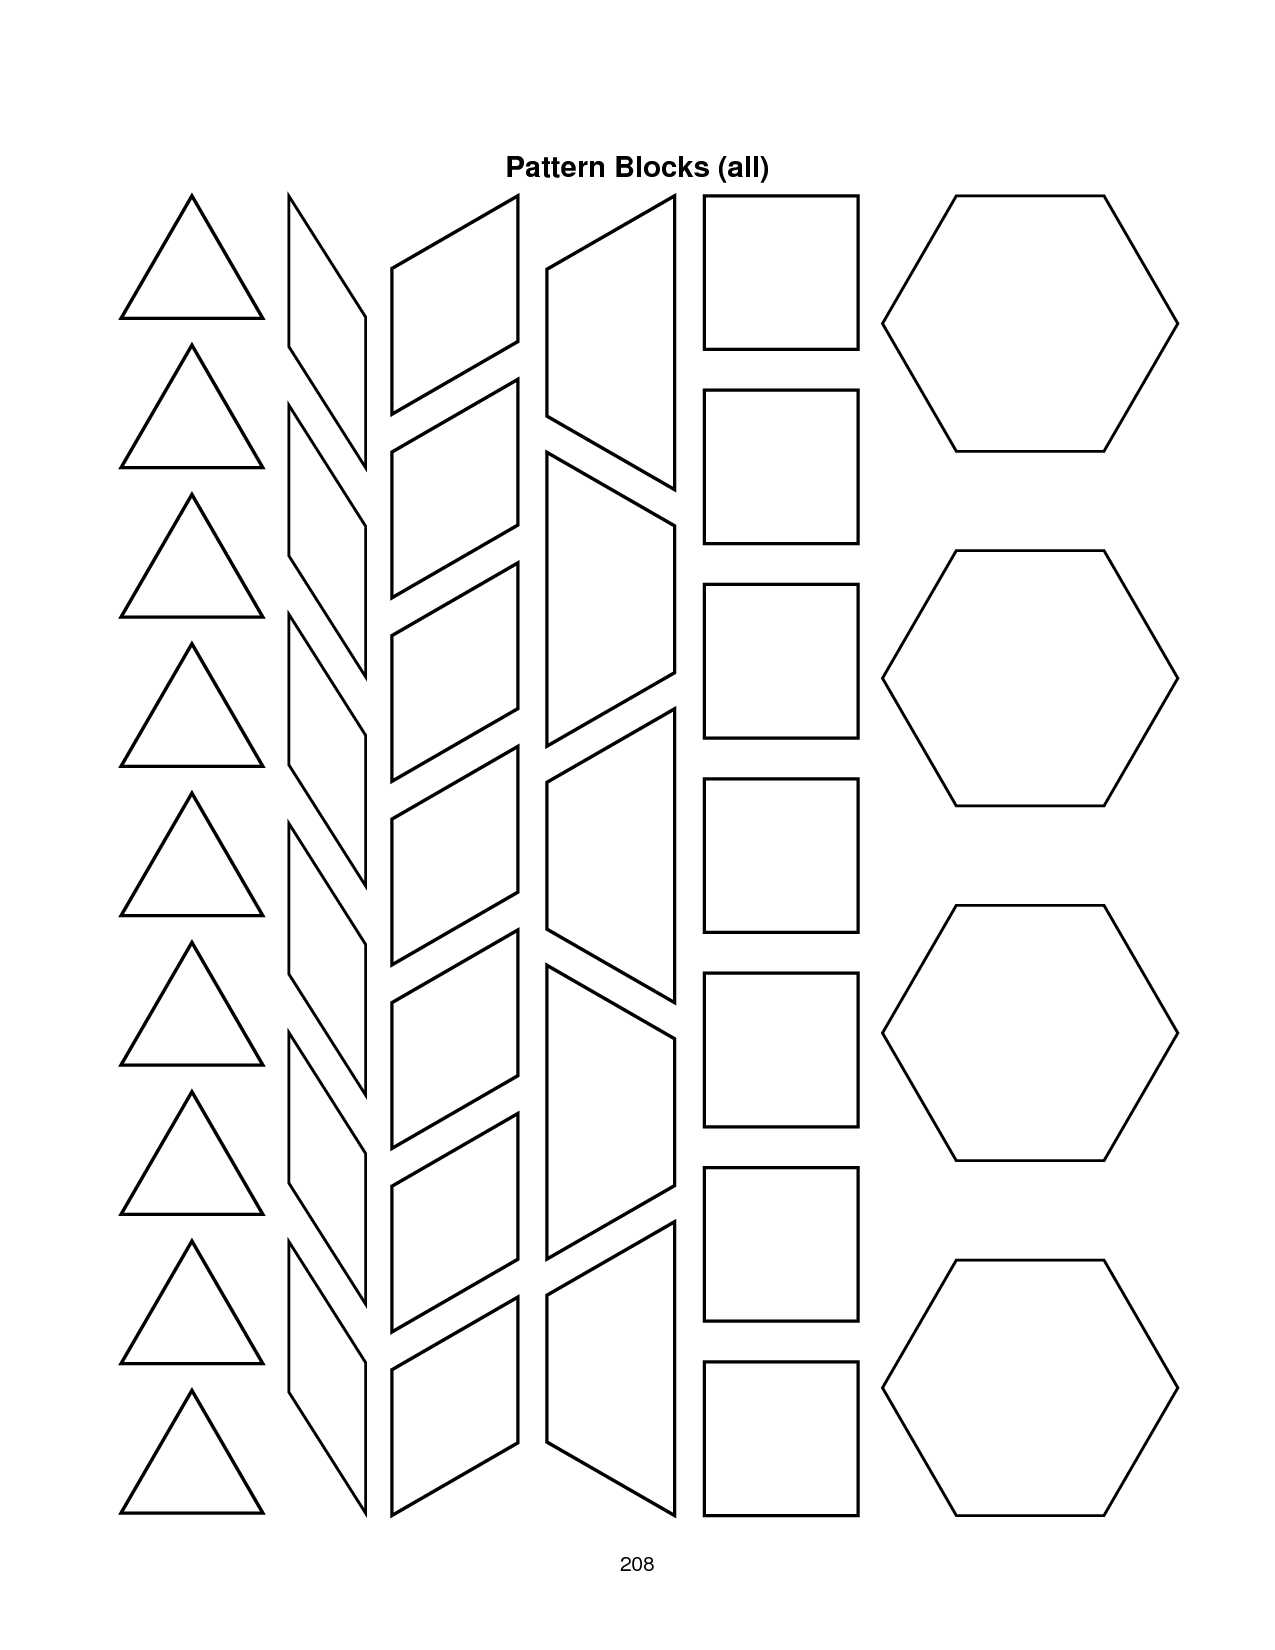 28 Images Of Blank Alphabet Pattern Block Template | Migapps With Blank Pattern Block Templates